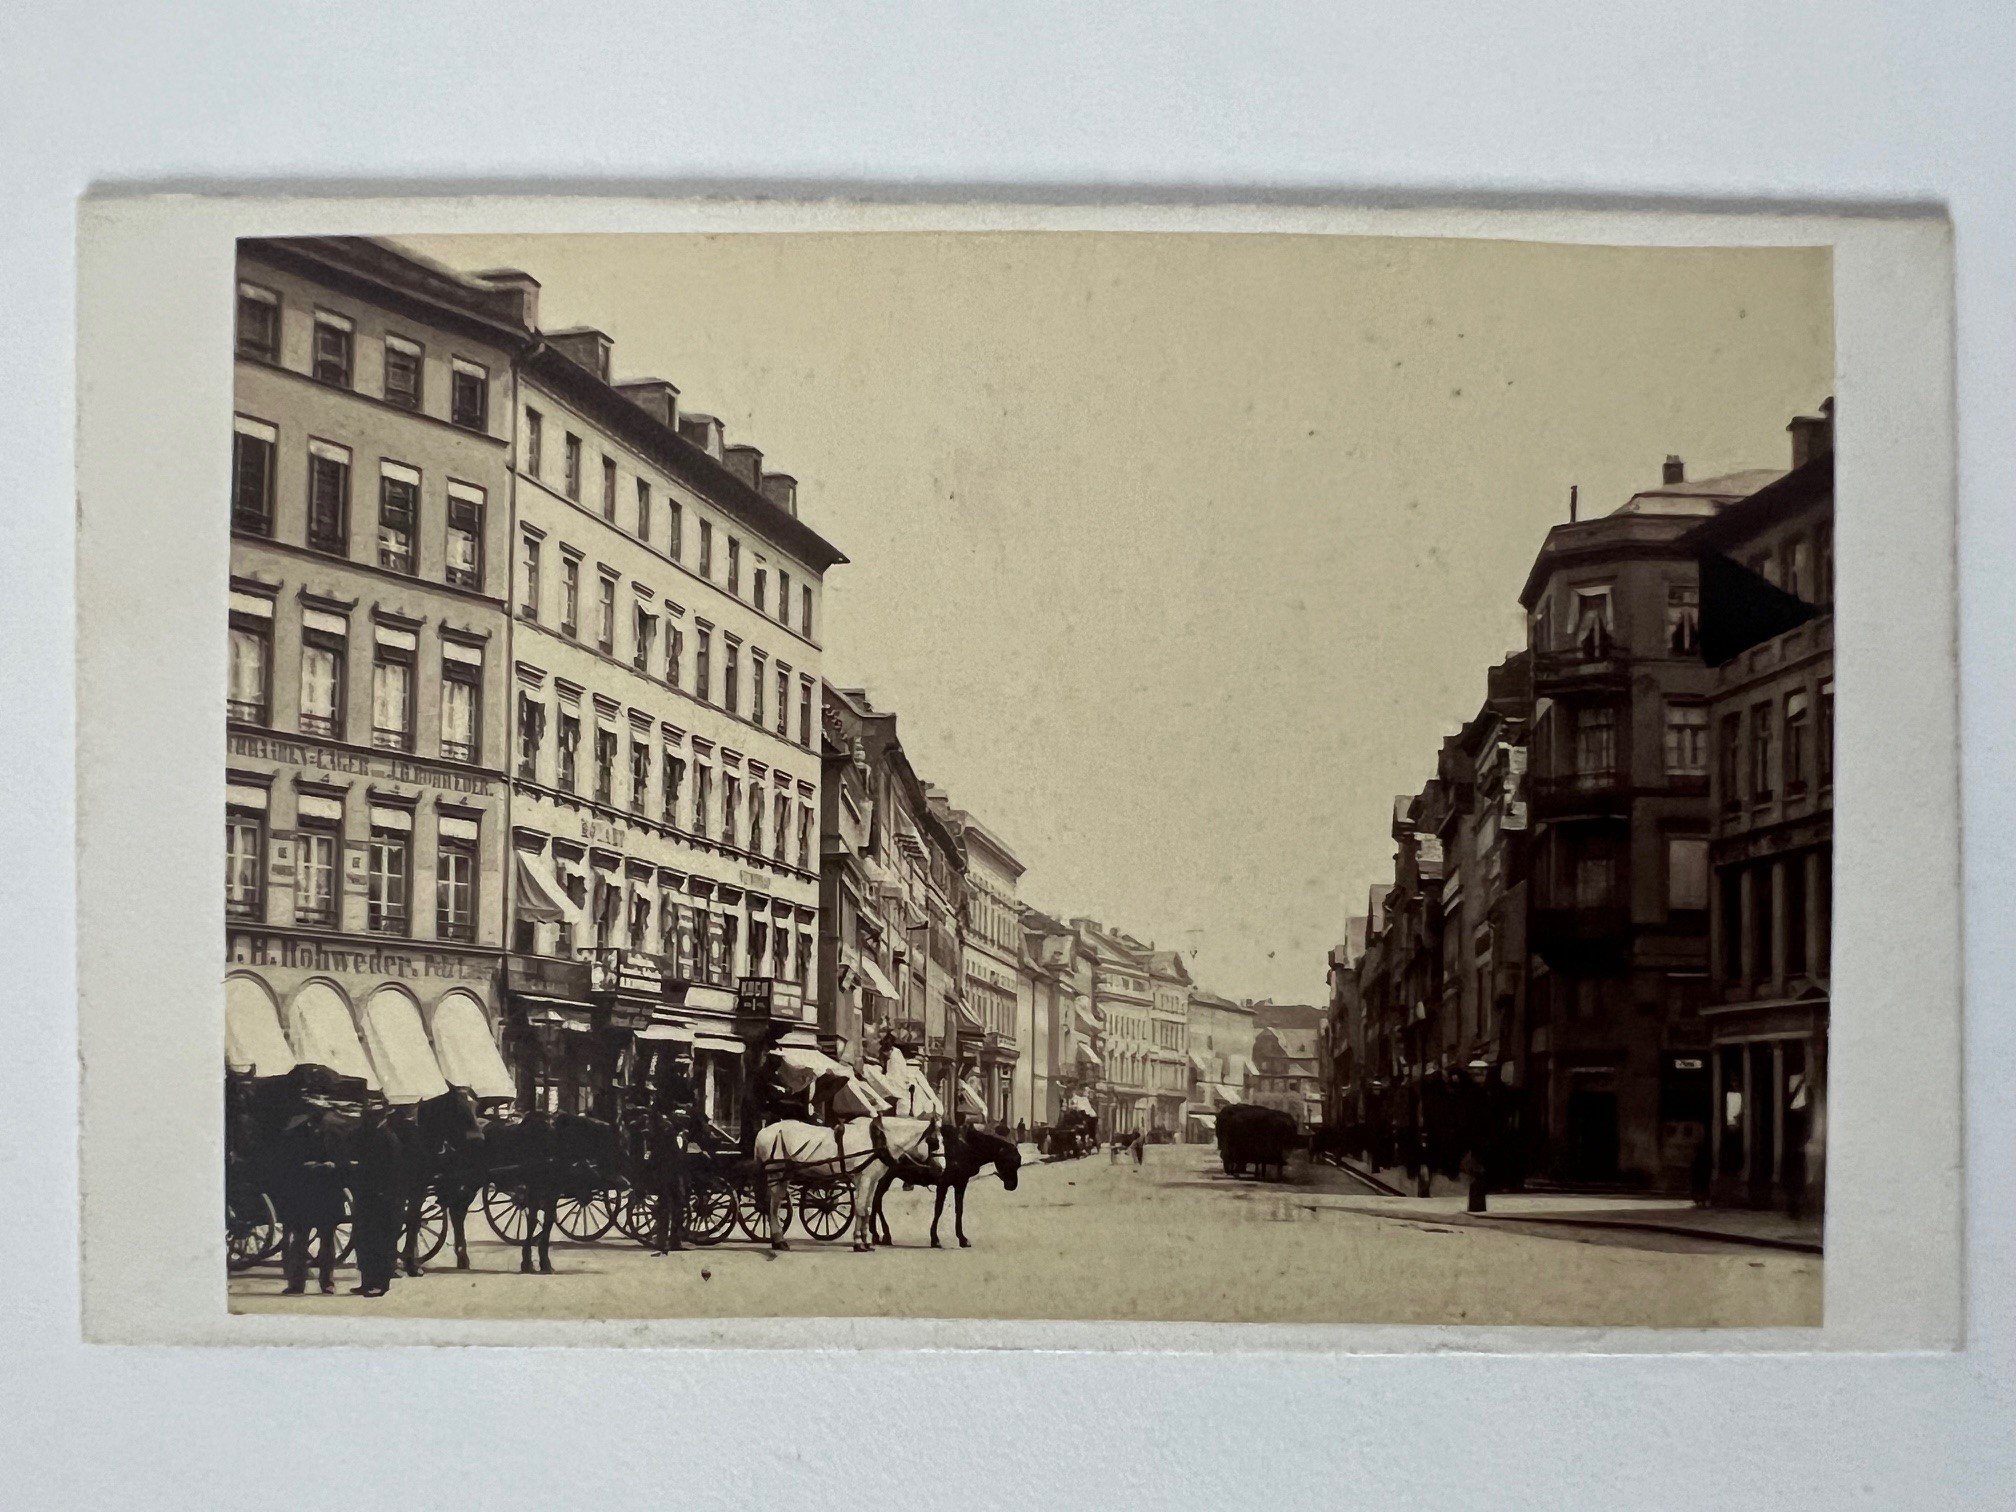 CdV, Theodor Creifelds, Frankfurt, Nr. 282, Zeil, ca. 1870. (Taunus-Rhein-Main - Regionalgeschichtliche Sammlung Dr. Stefan Naas CC BY-NC-SA)